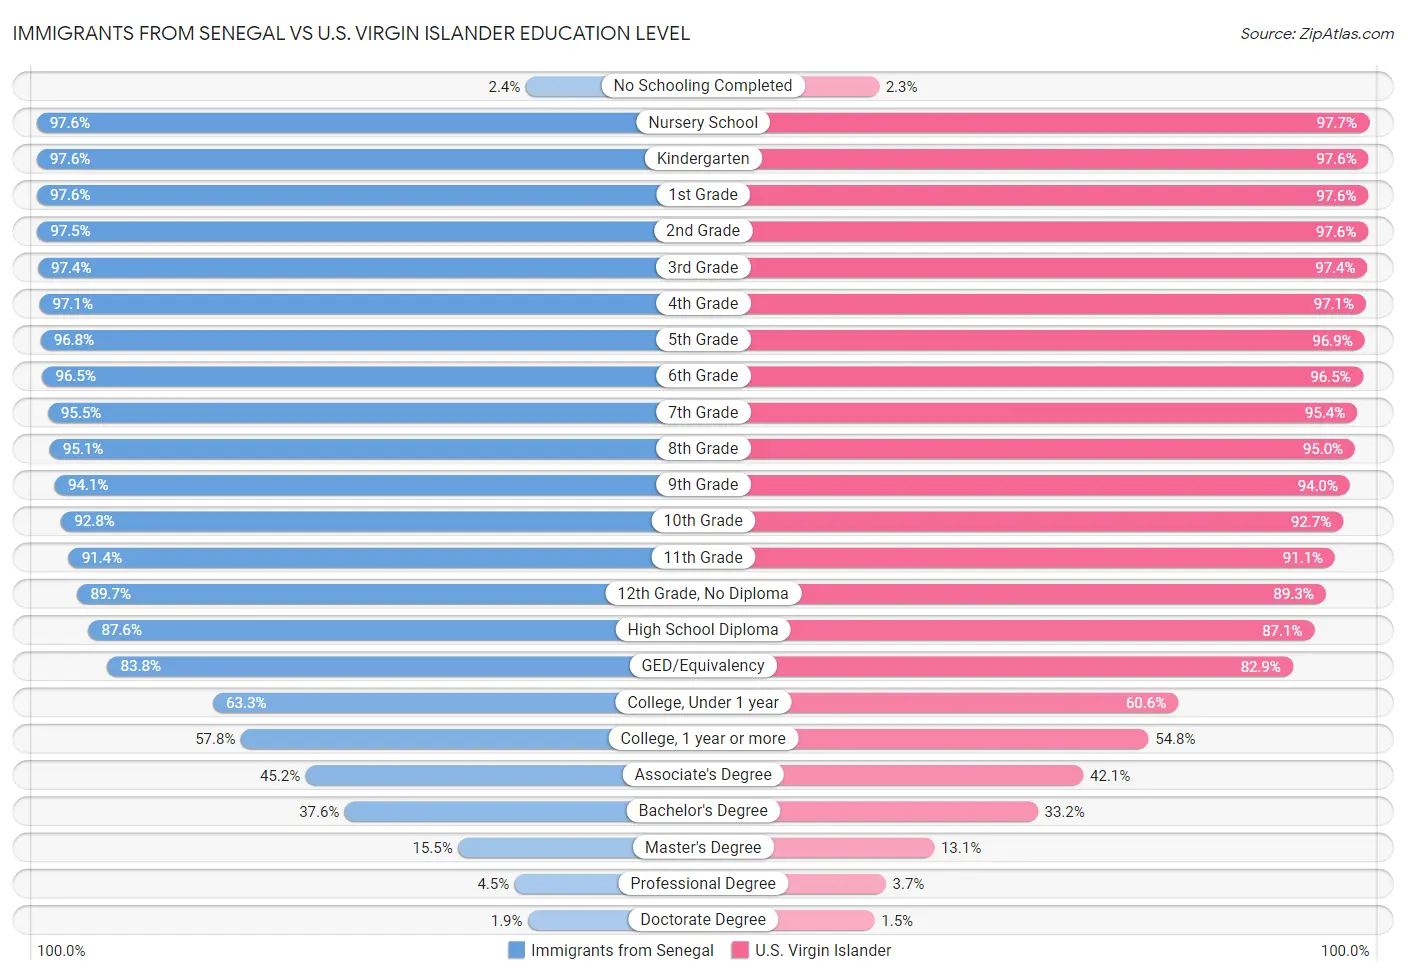 Immigrants from Senegal vs U.S. Virgin Islander Education Level